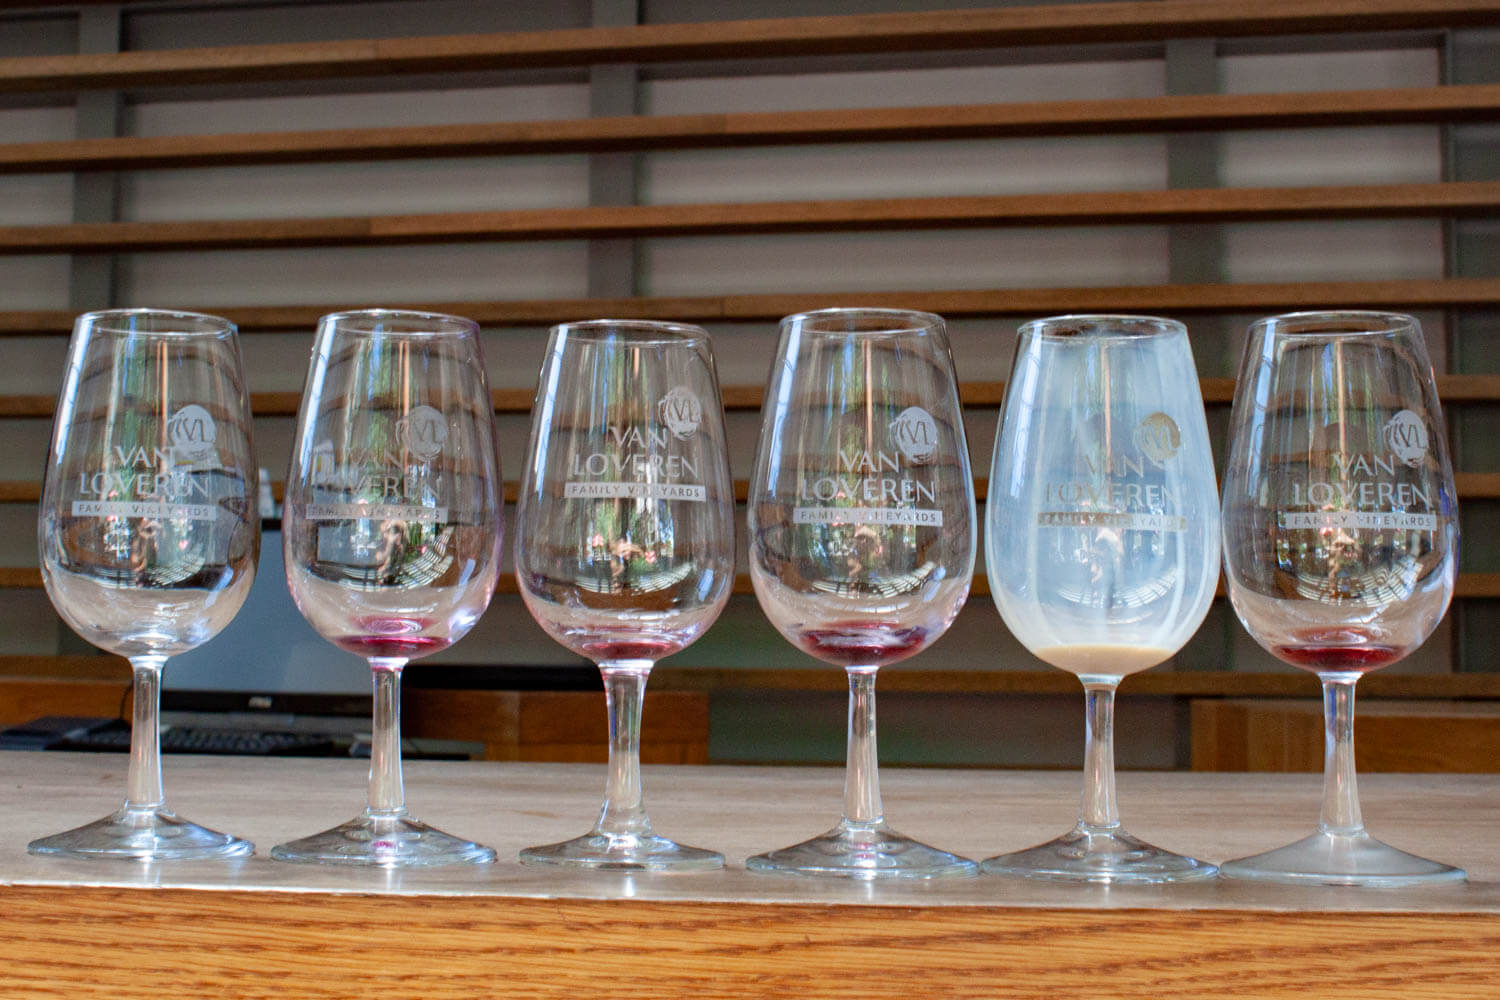 Line-up of empty tasting glasses at Van Loveren winery